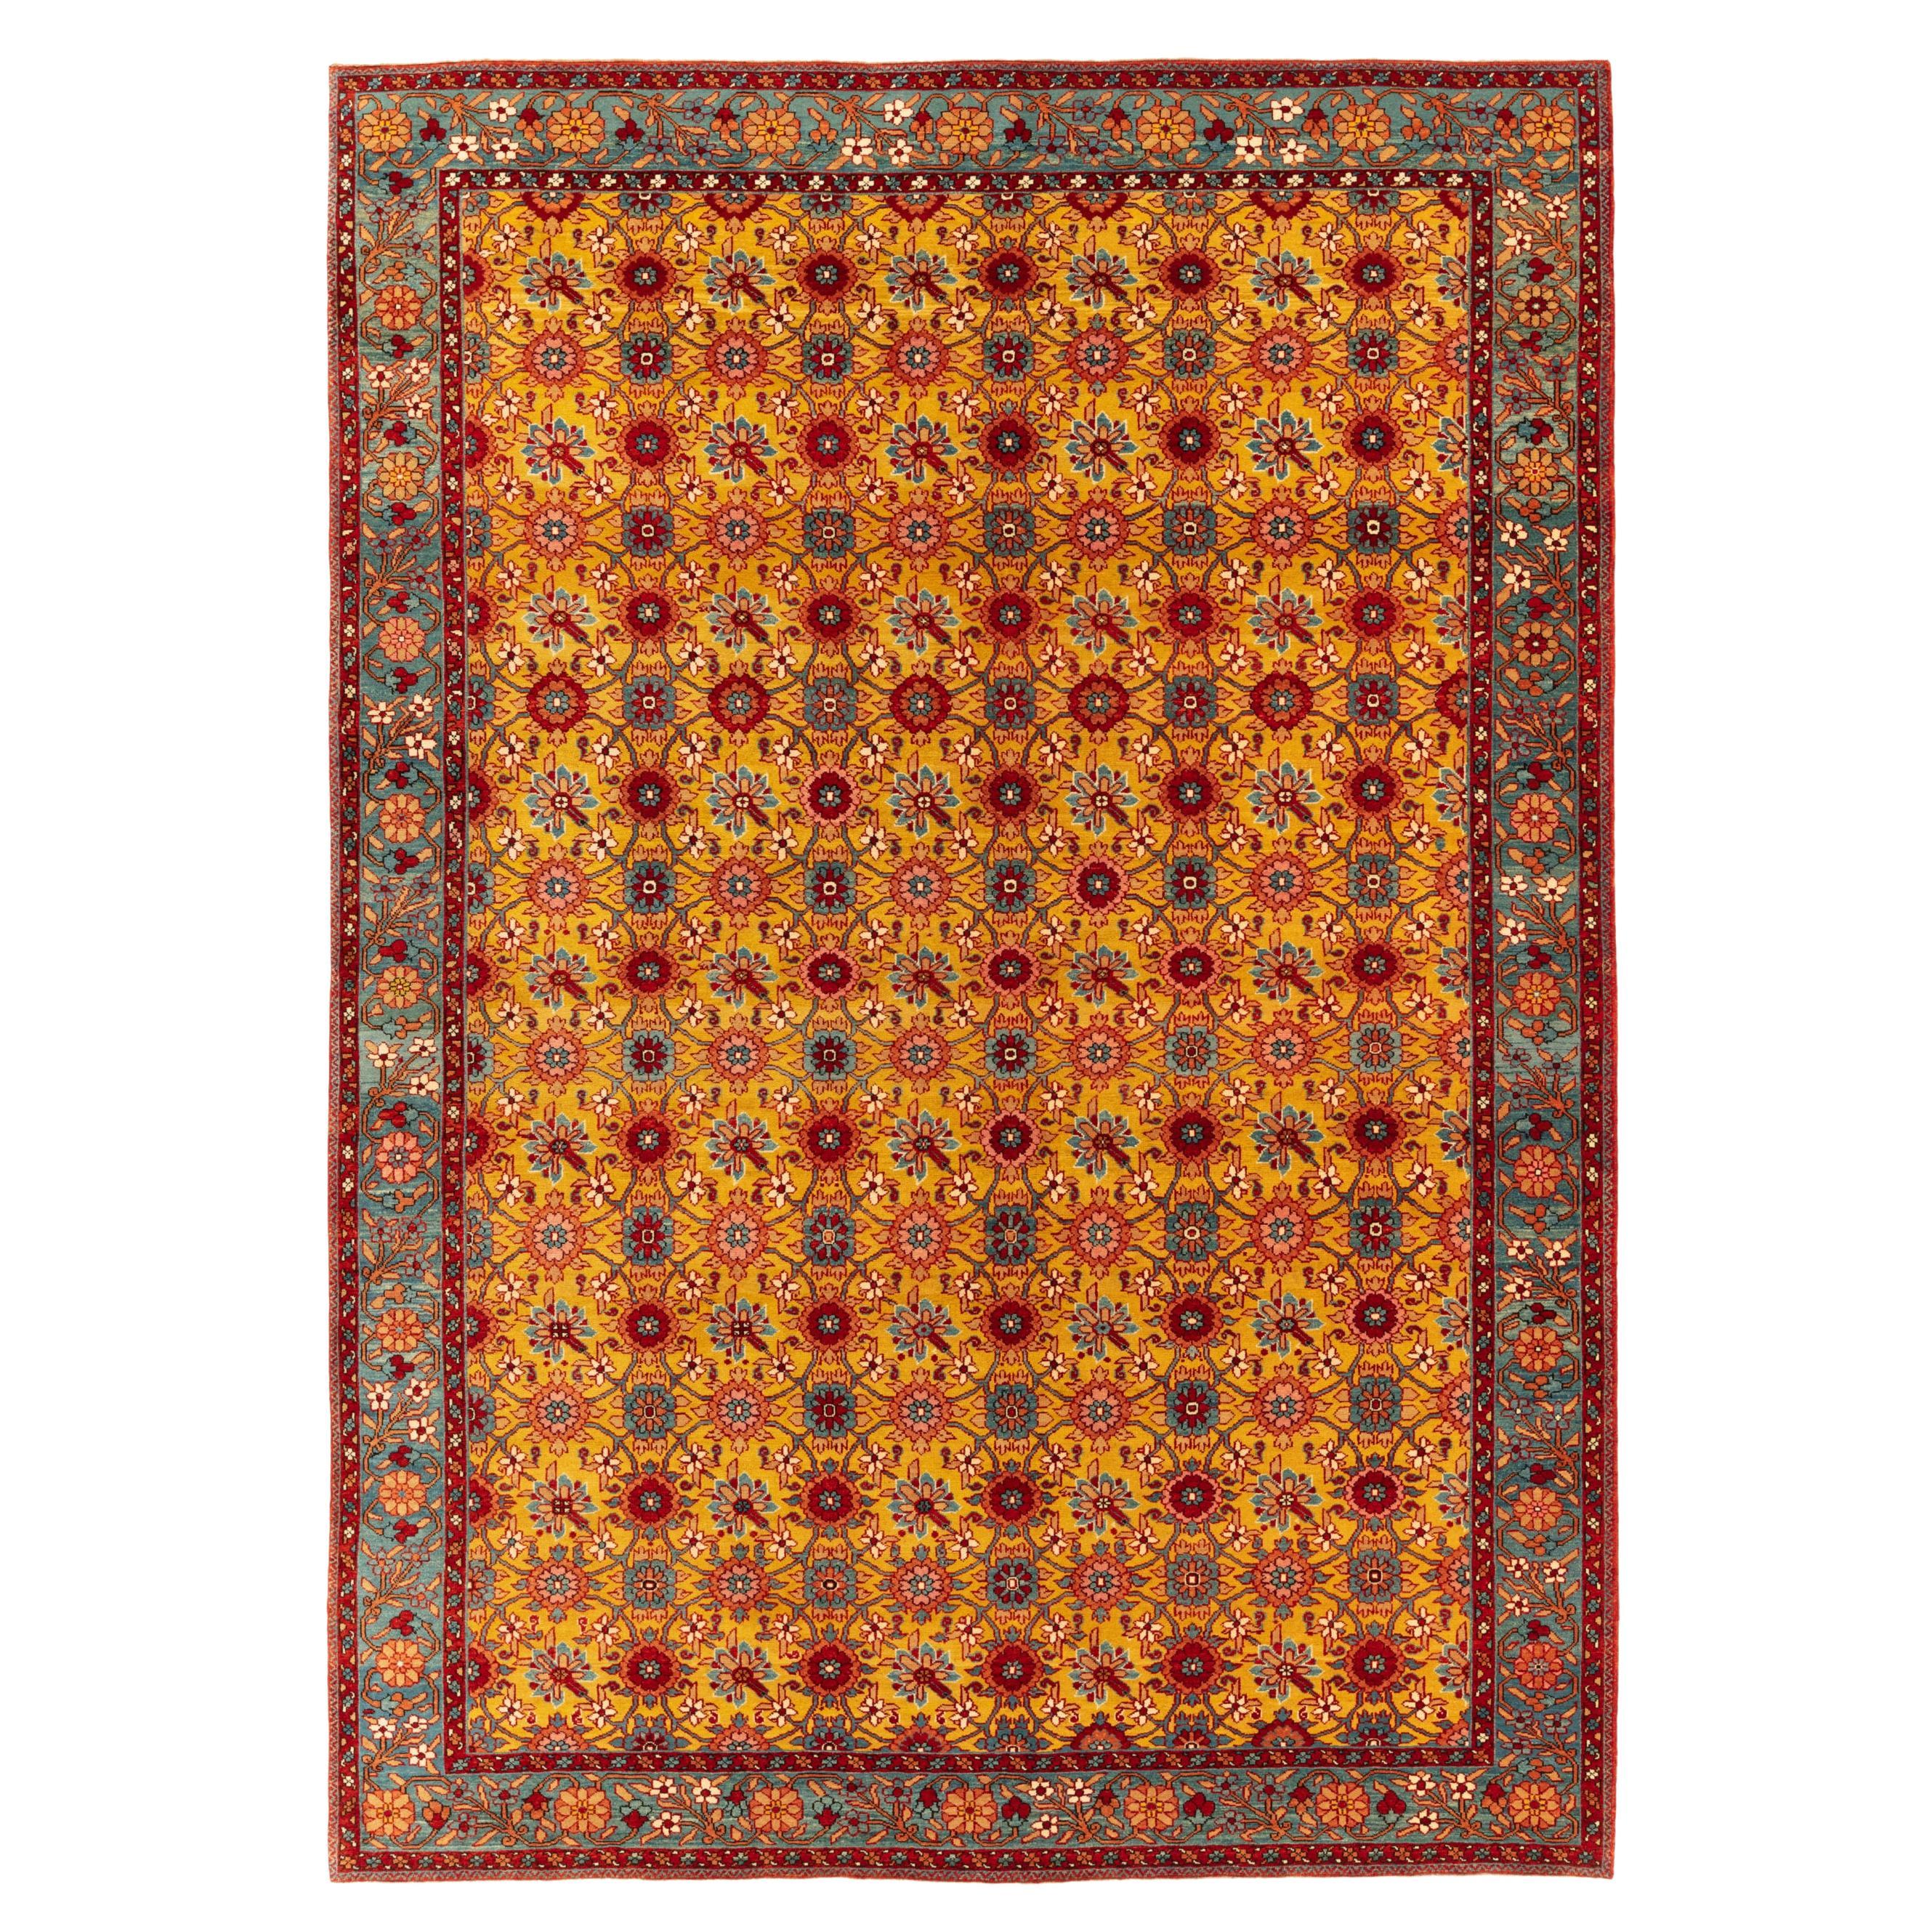 Ararat Rugs Mina Khani Rug, 19th Century Persian Revival Carpet, Natural Dyed For Sale